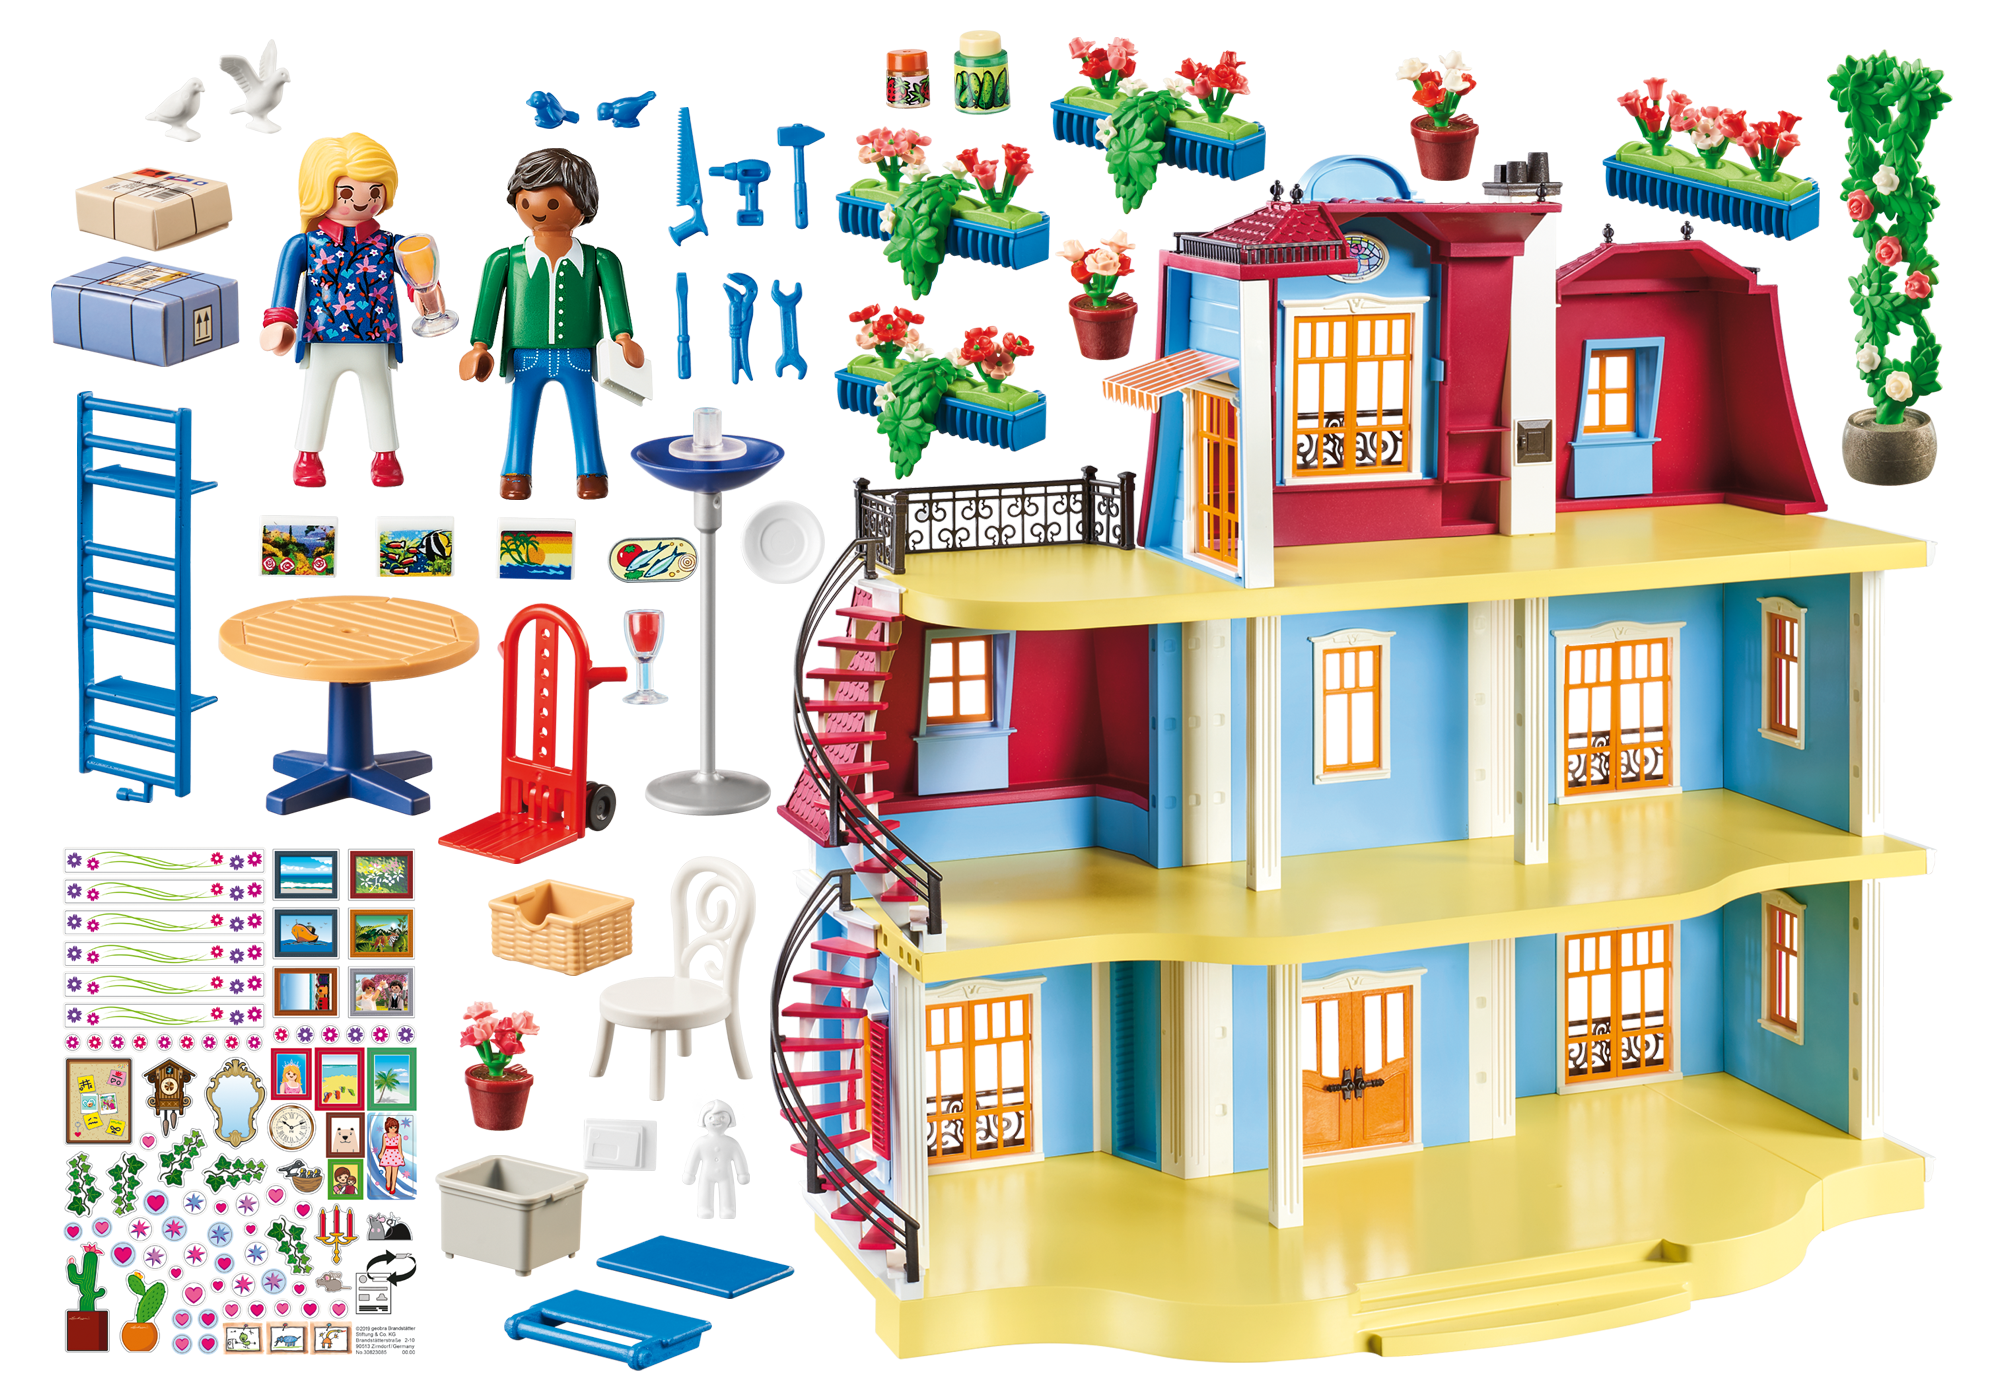 playmobil dollhouse sets